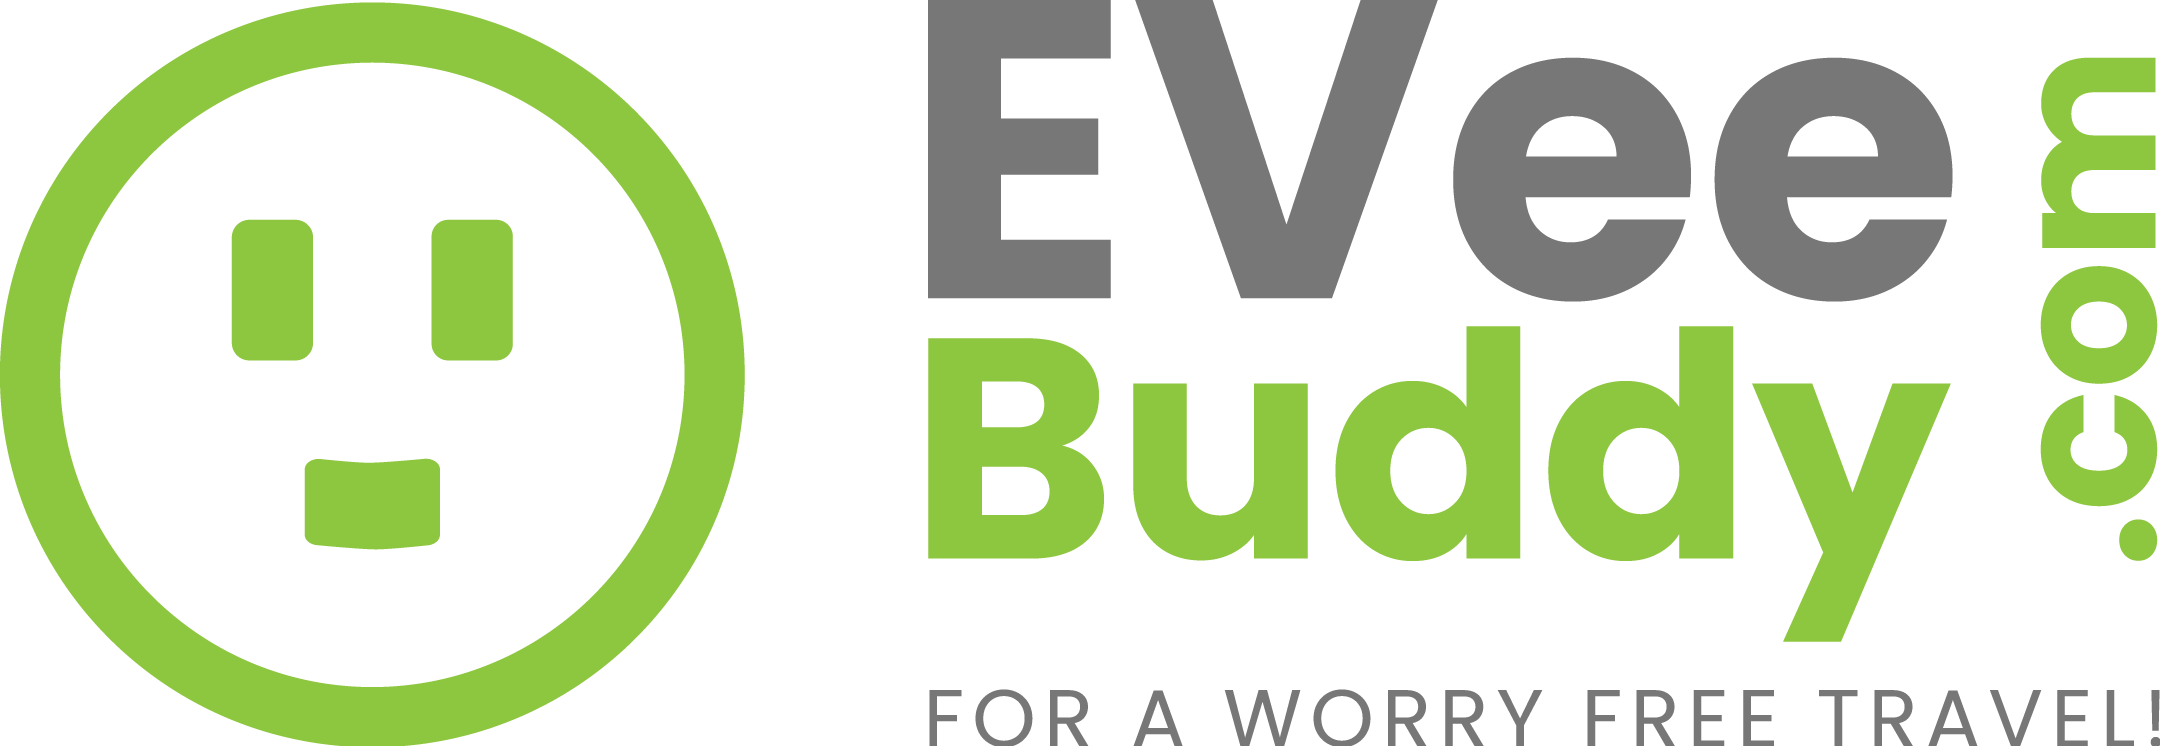 Evee Buddy Logo